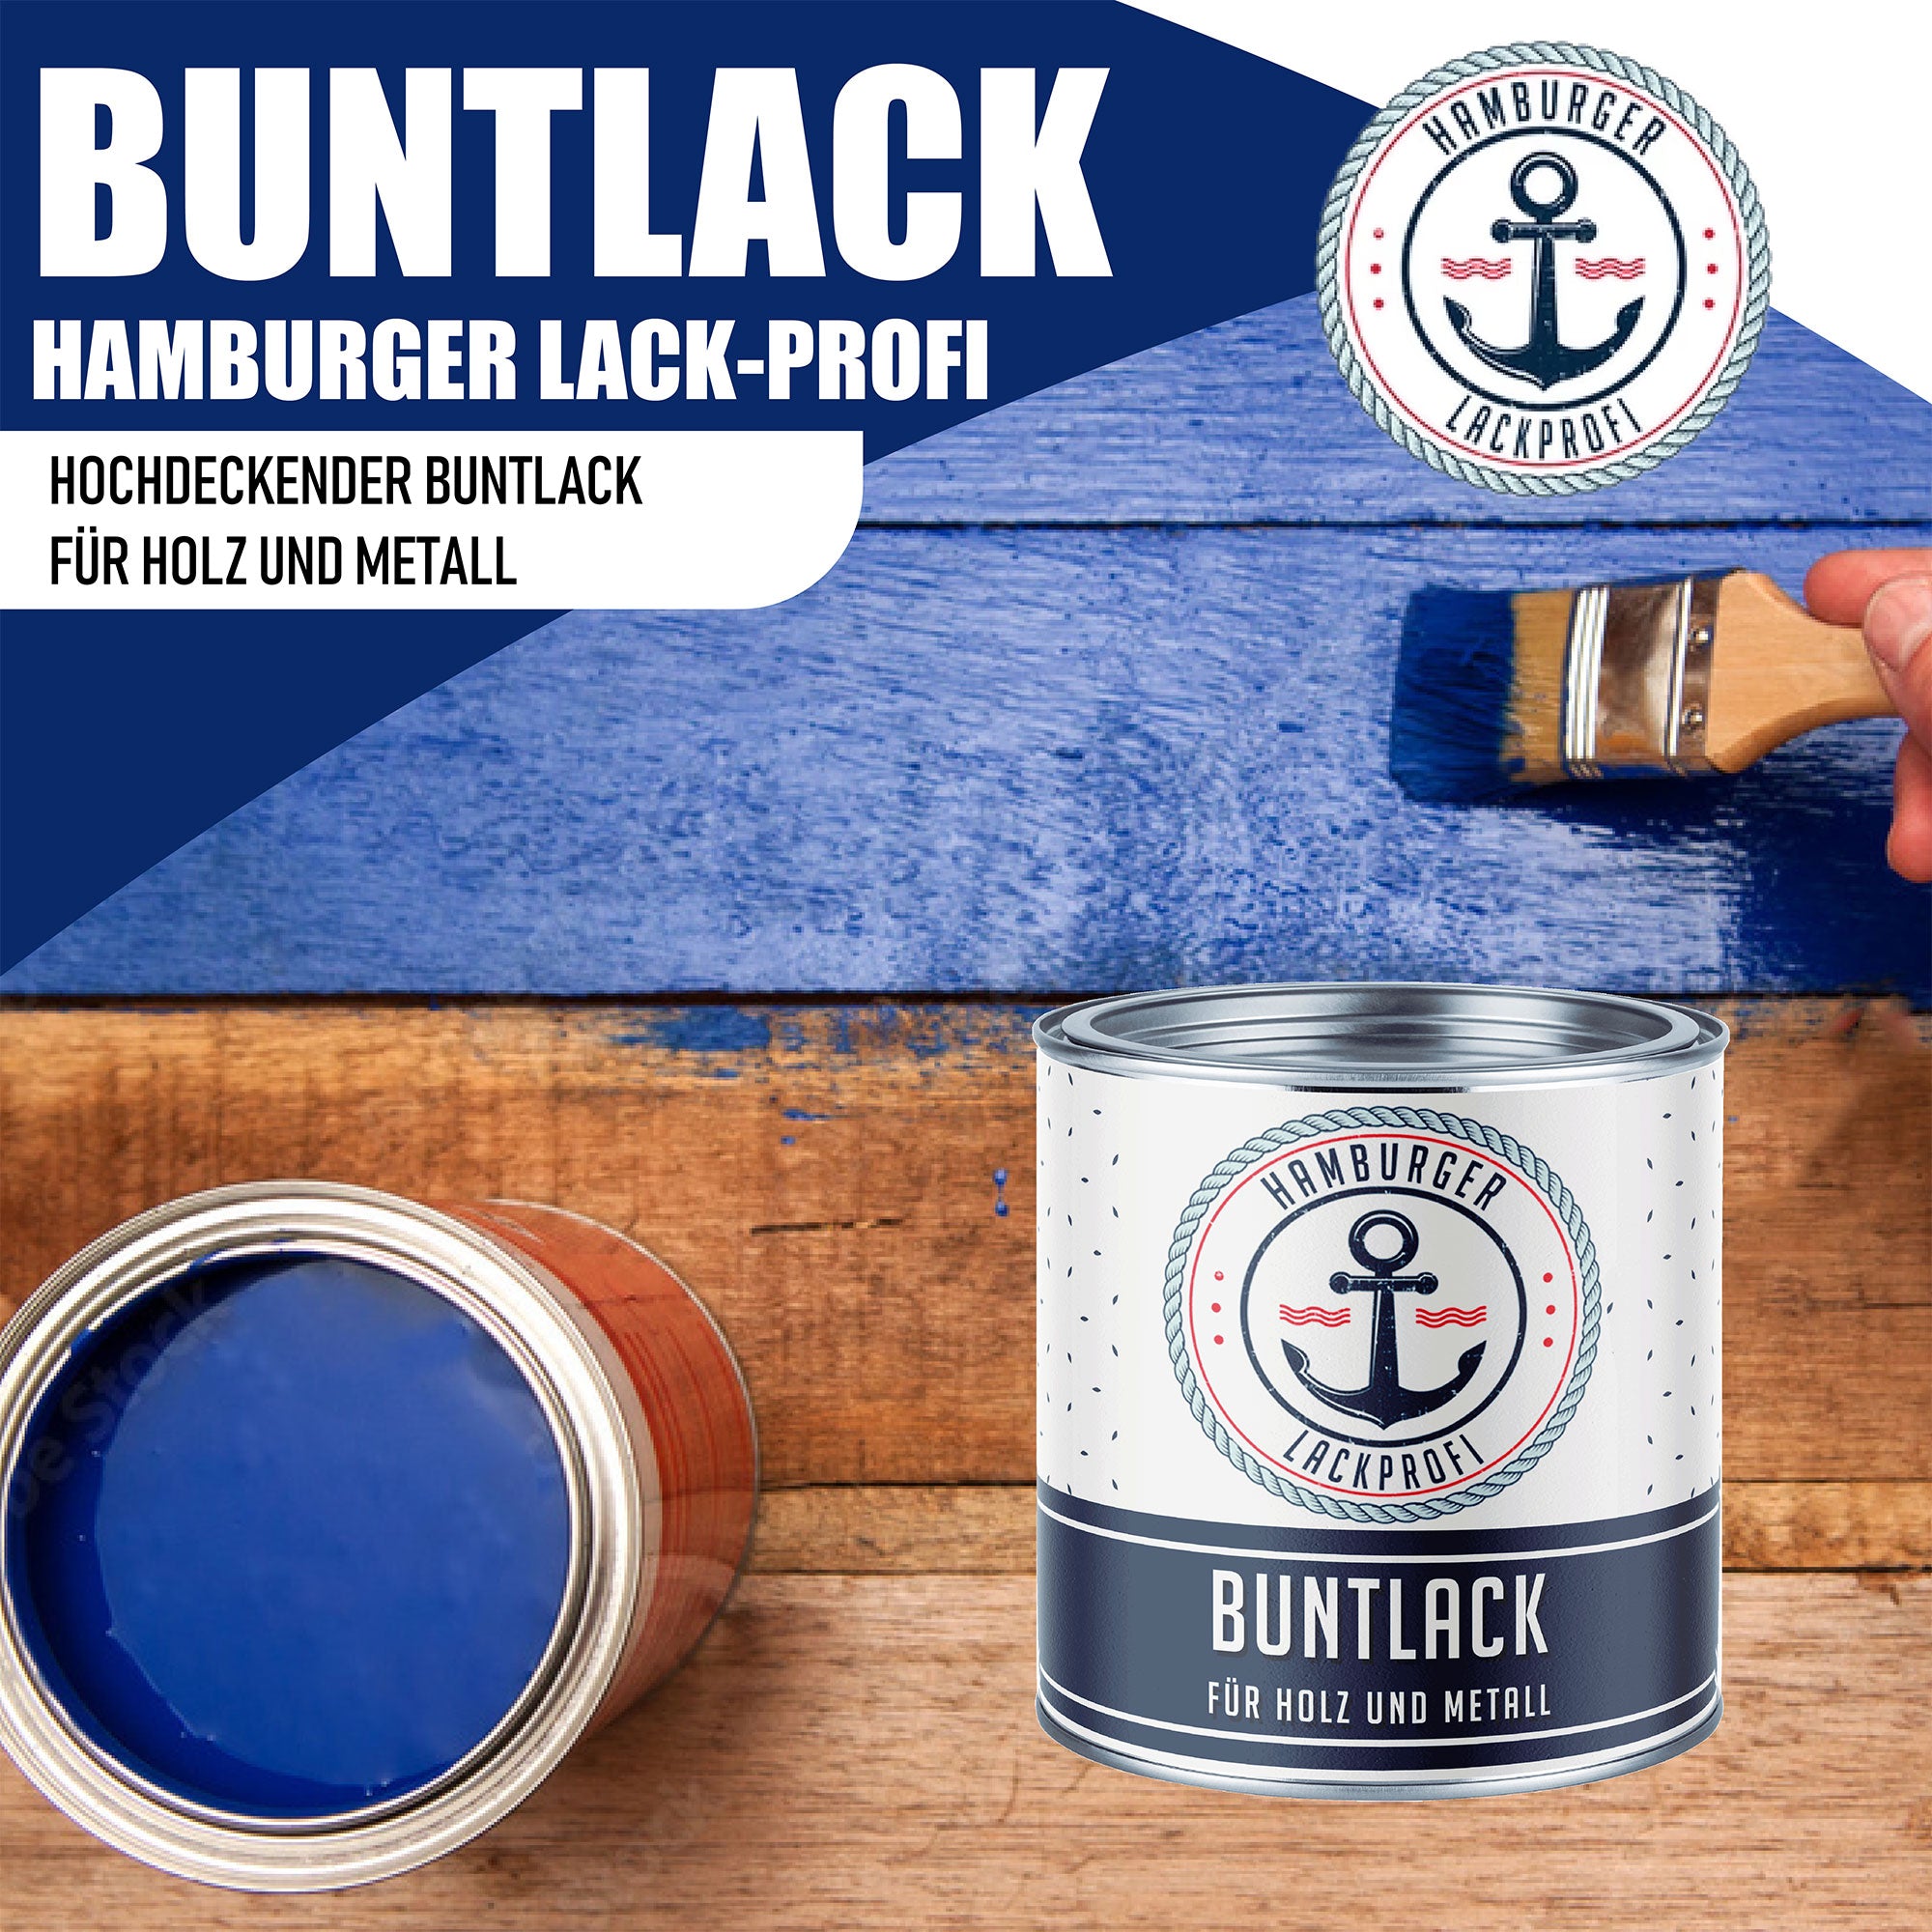 Hamburger Lack-Profi Buntlack in Lichtgrau RAL 7035 mit Lackierset (X300) & Verdünnung (1 L) - 30% Sparangebot